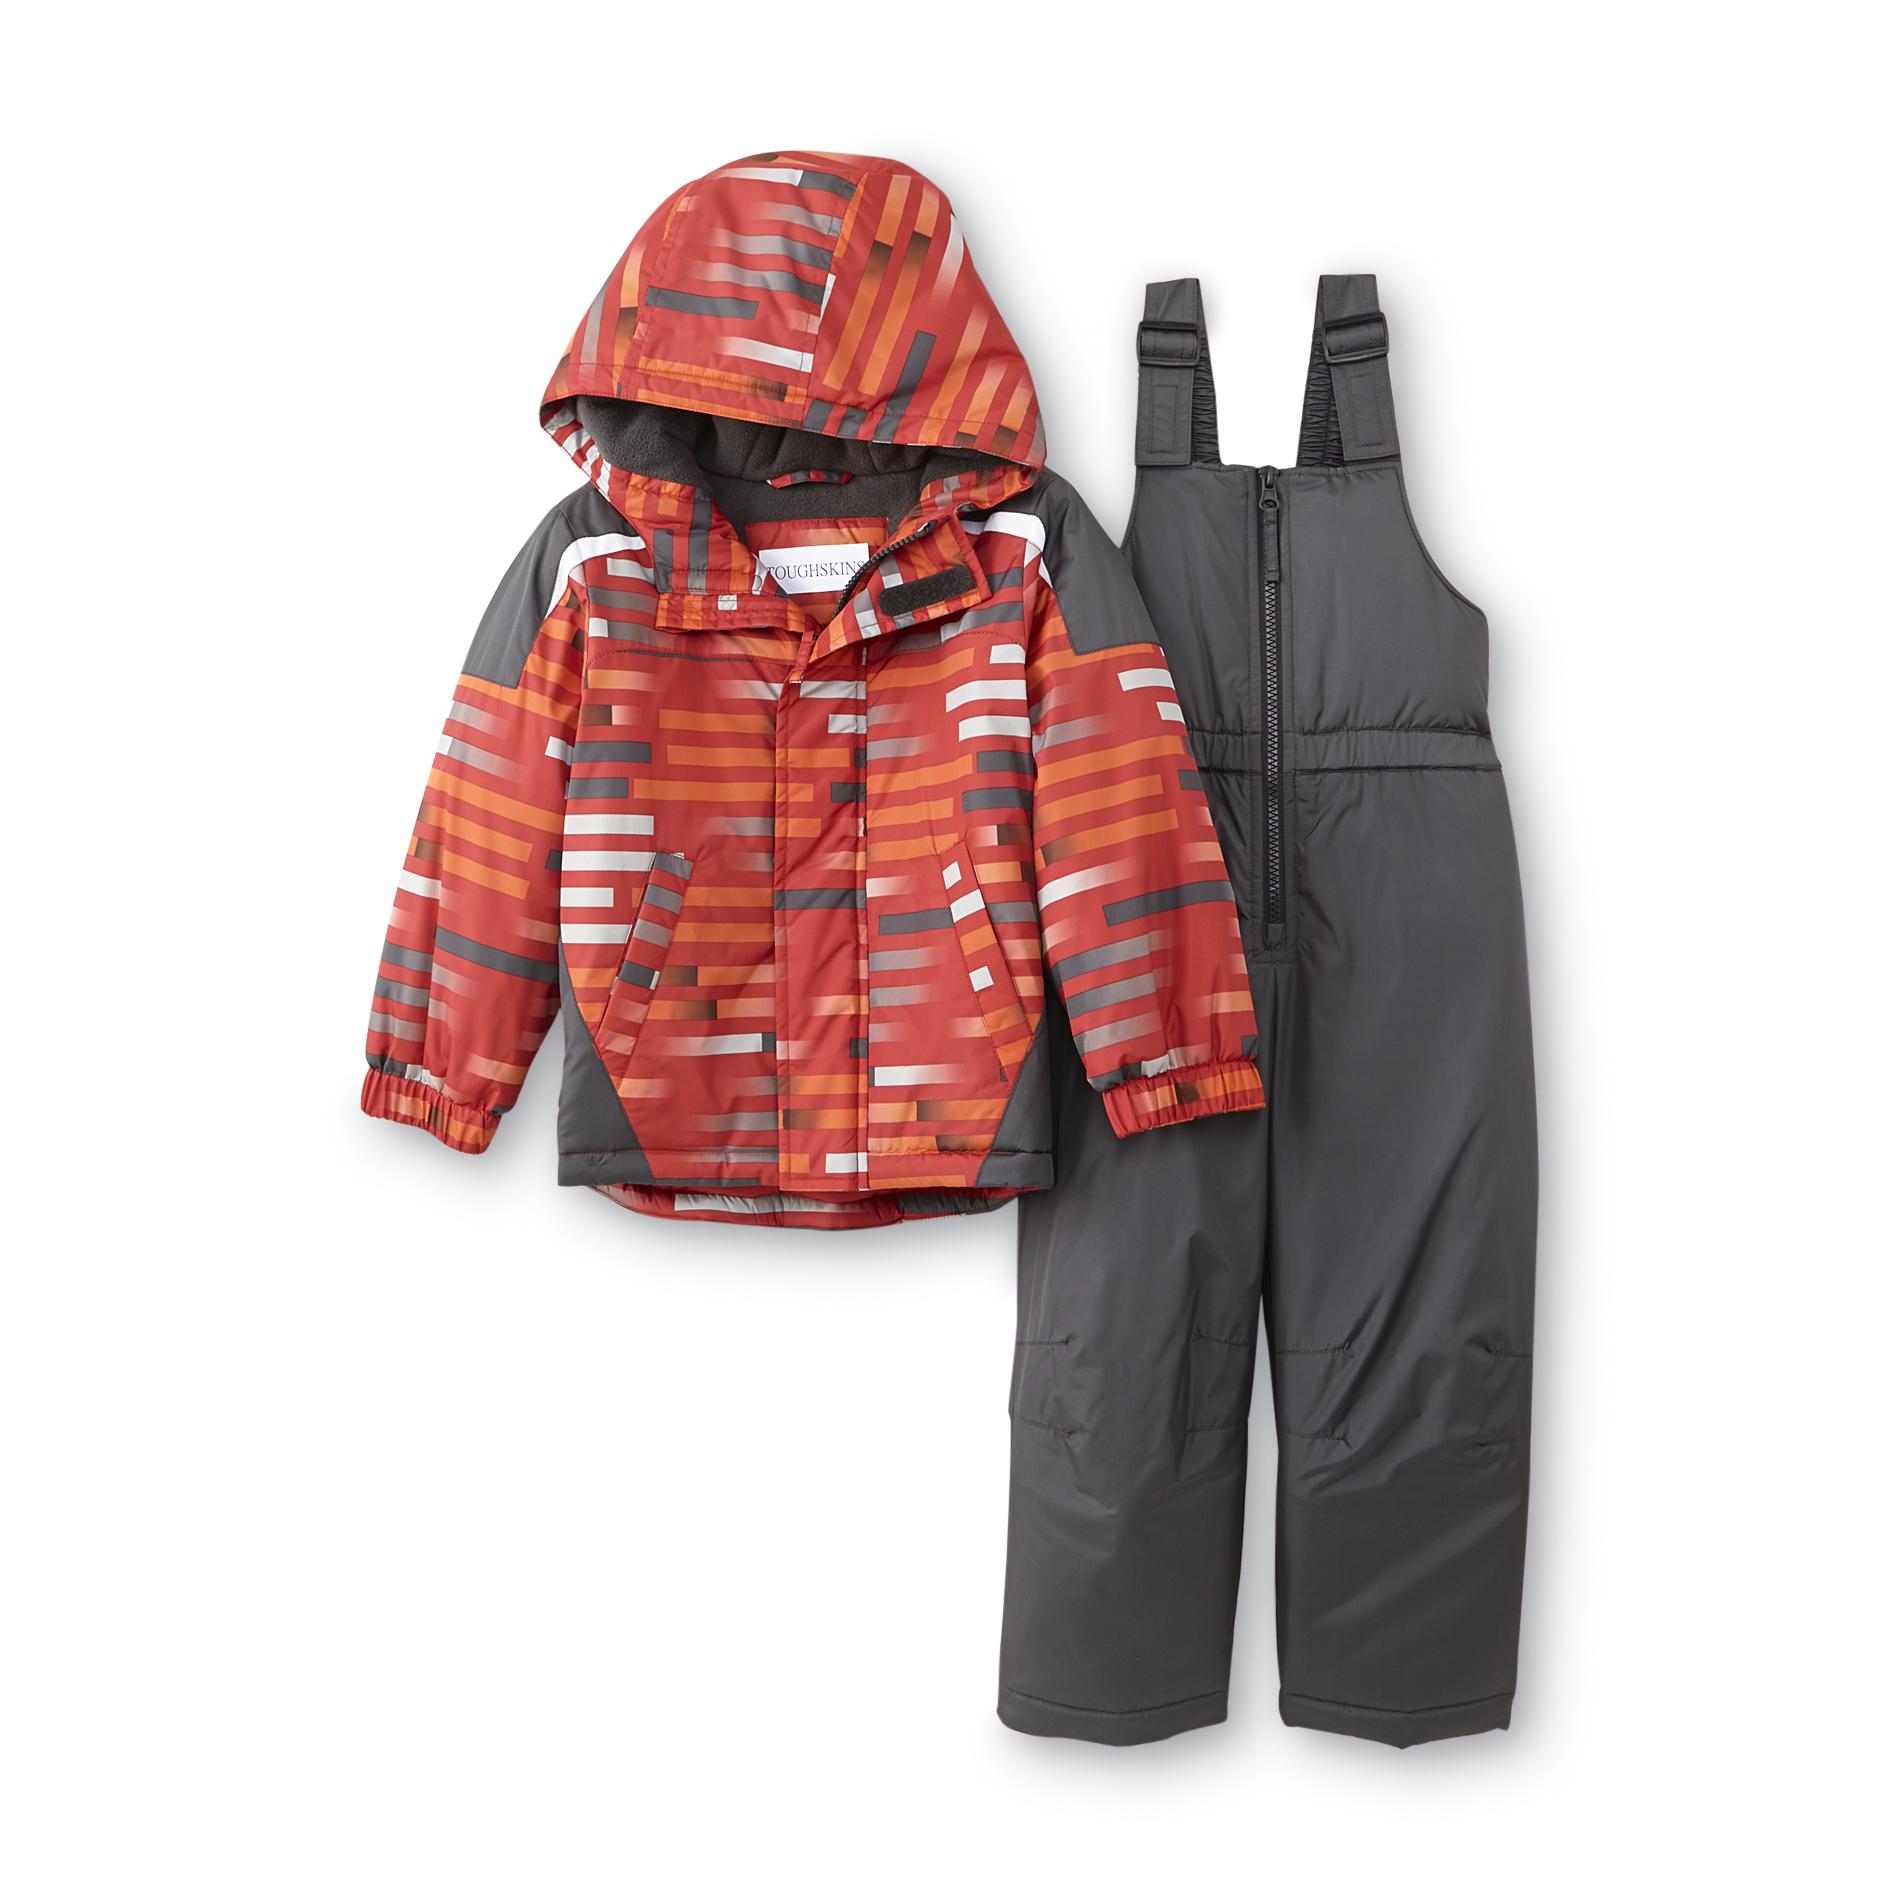 Toughskins Infant Boy's Snowboarding Jacket & Overalls - Striped